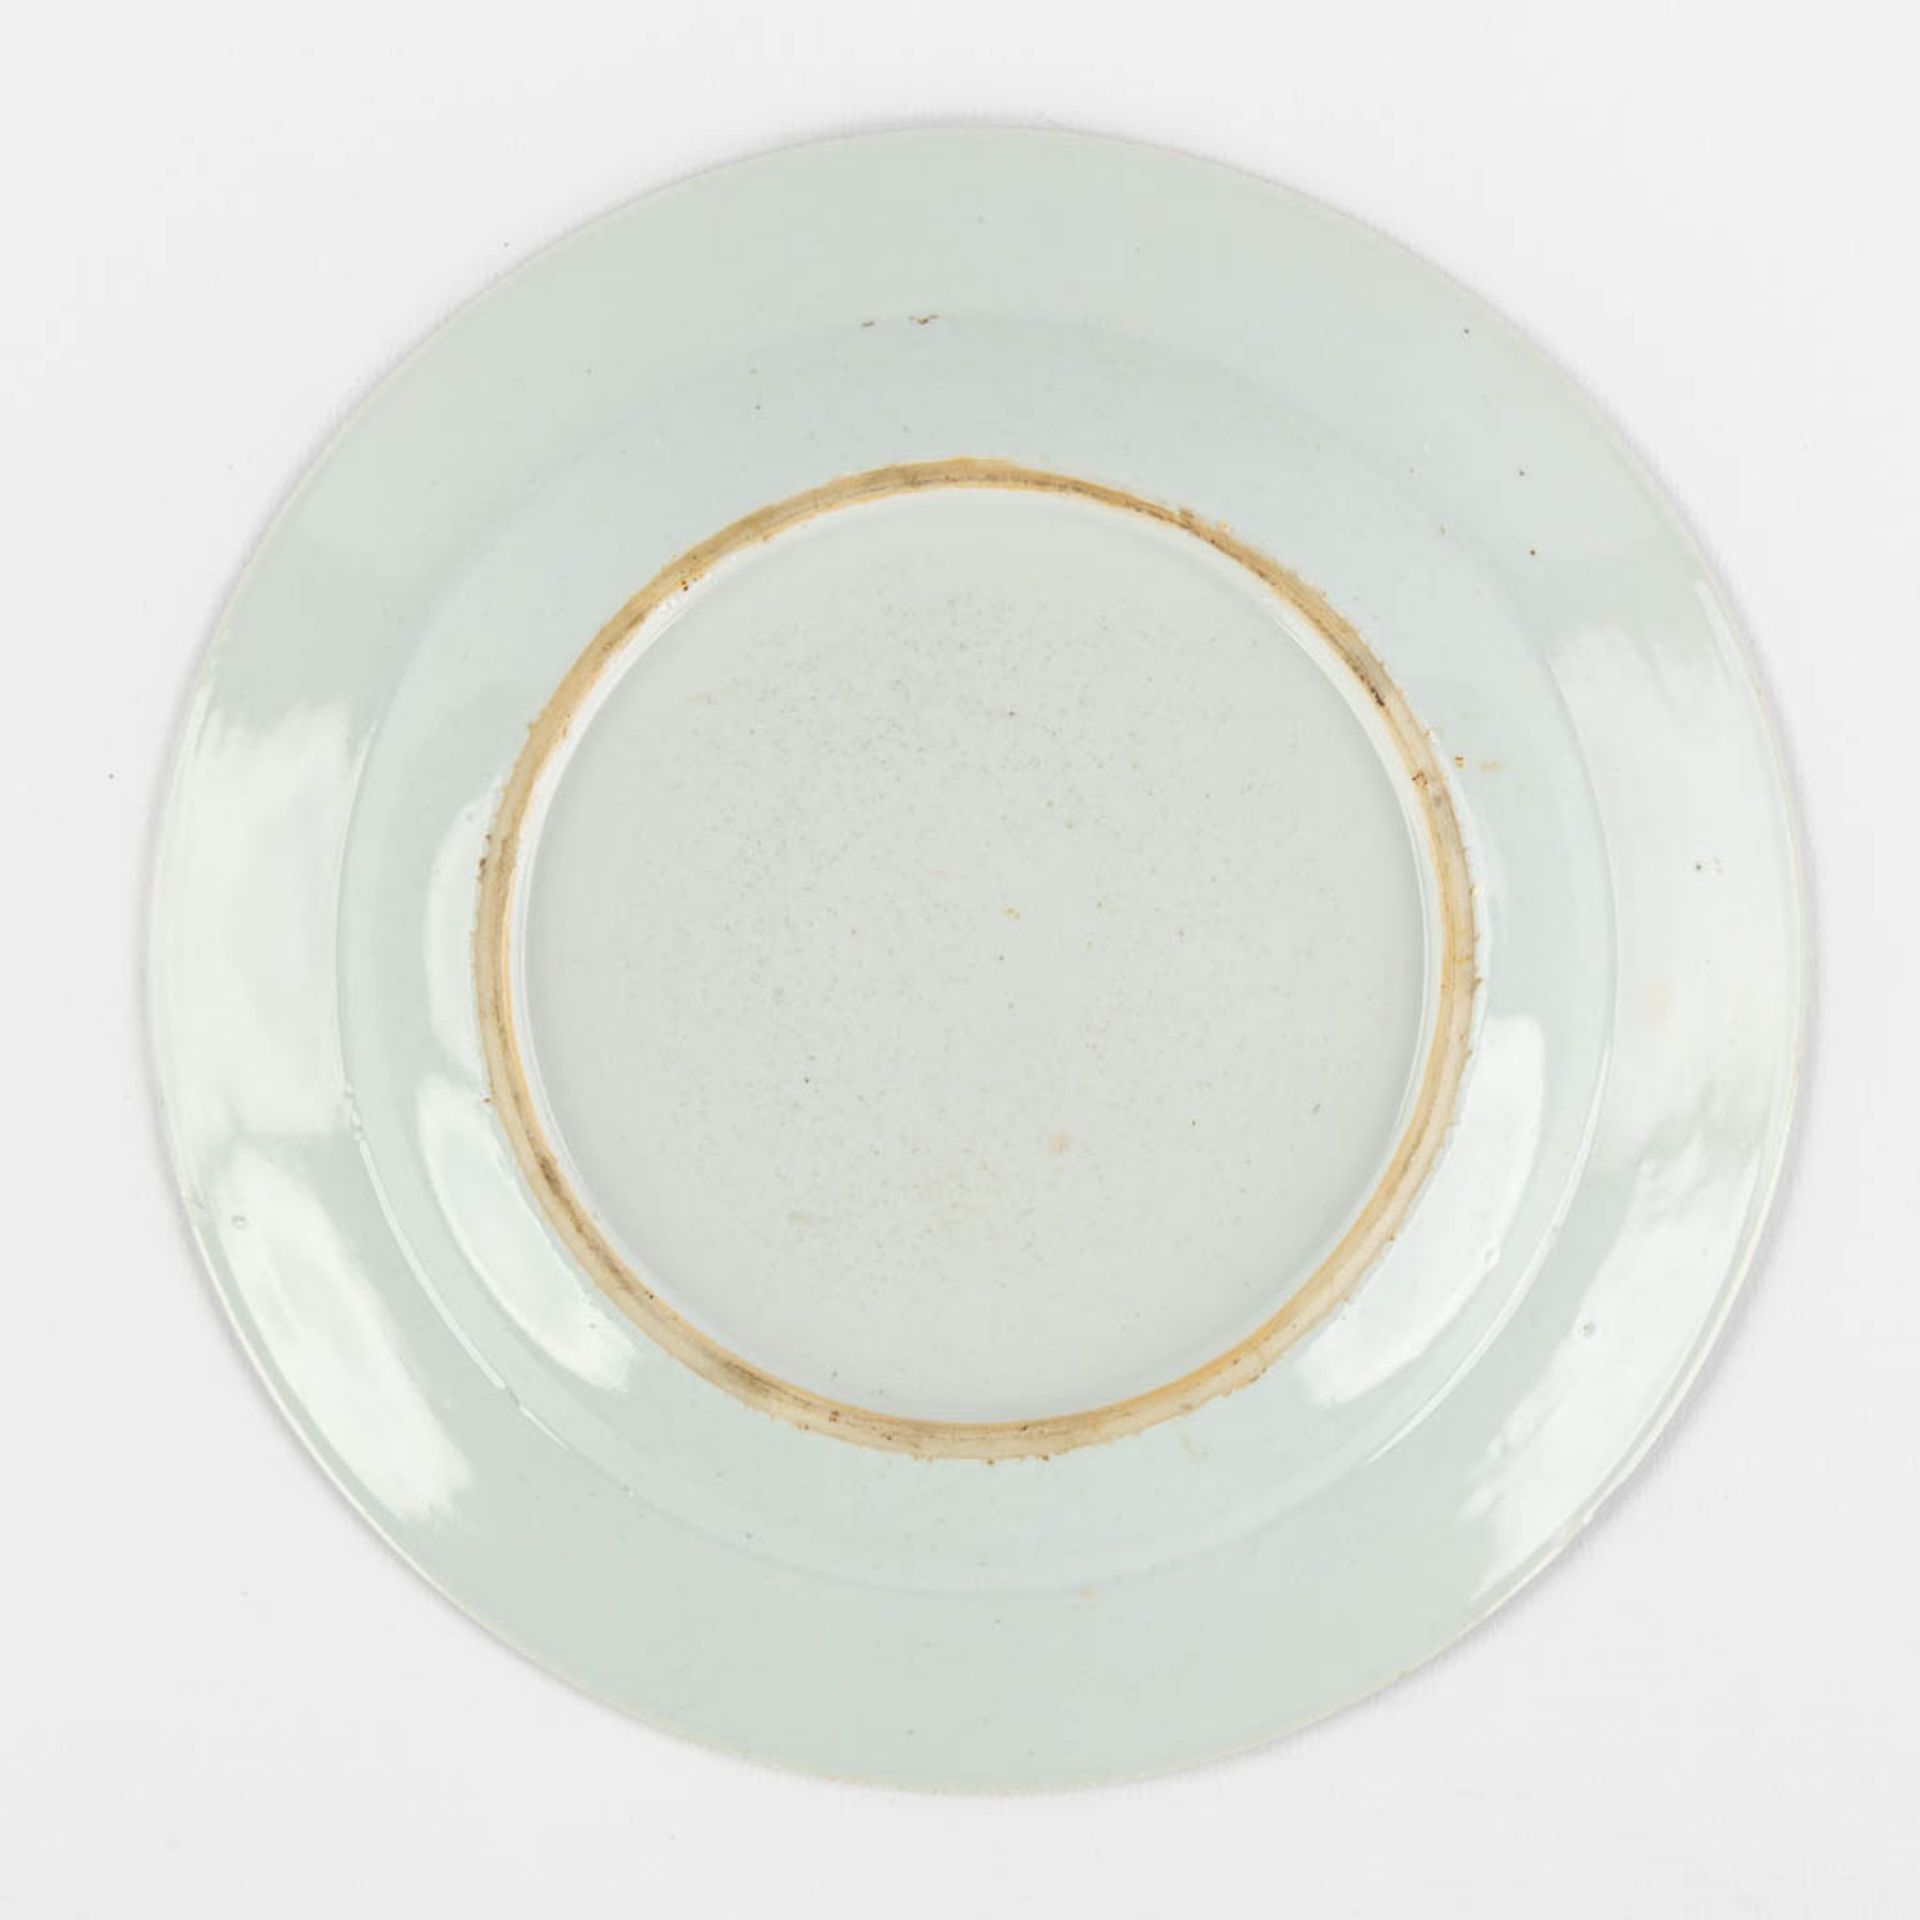 Six pieces of Japanese Imari porcelain, 19th/20th C. (D:23 cm) - Image 6 of 16